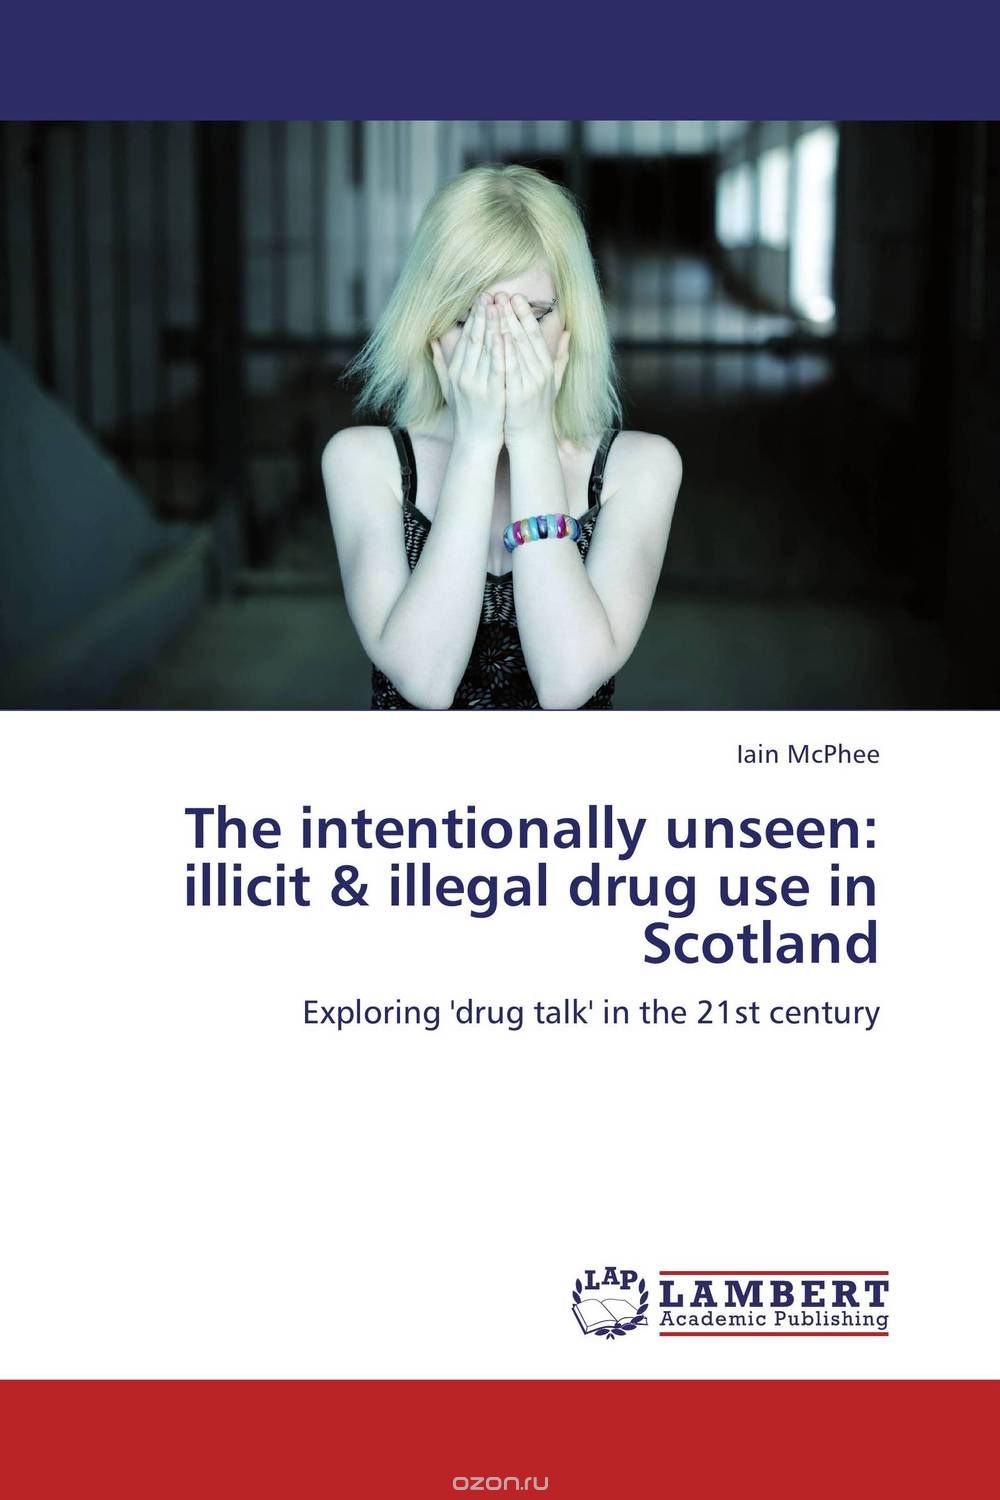 Скачать книгу "The intentionally unseen: illicit & illegal drug use in Scotland"